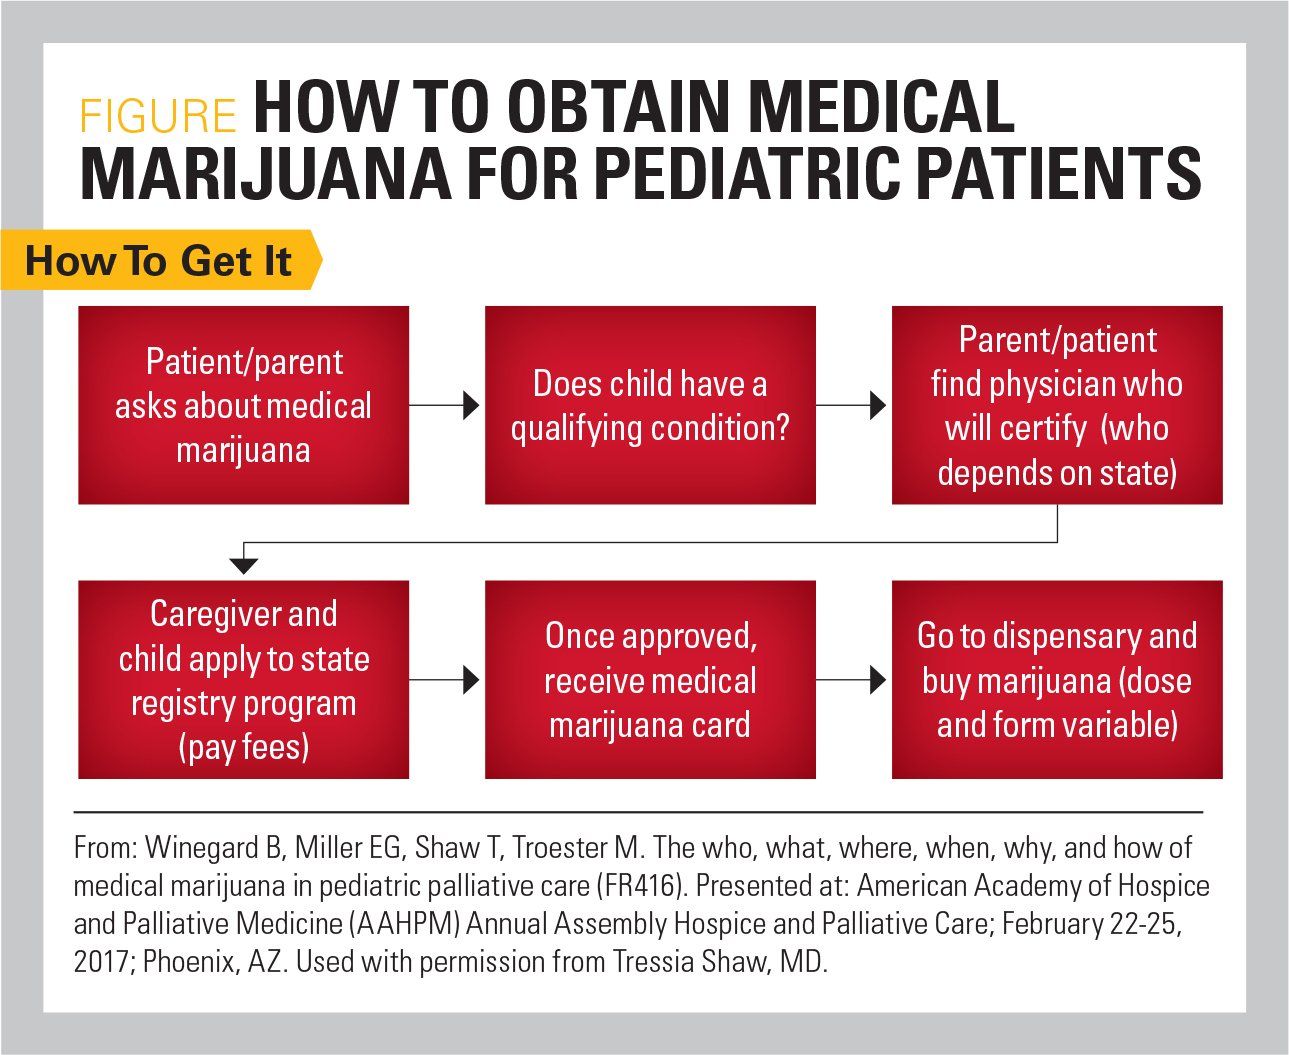 How to obtain medical marijuana for pediatric patients